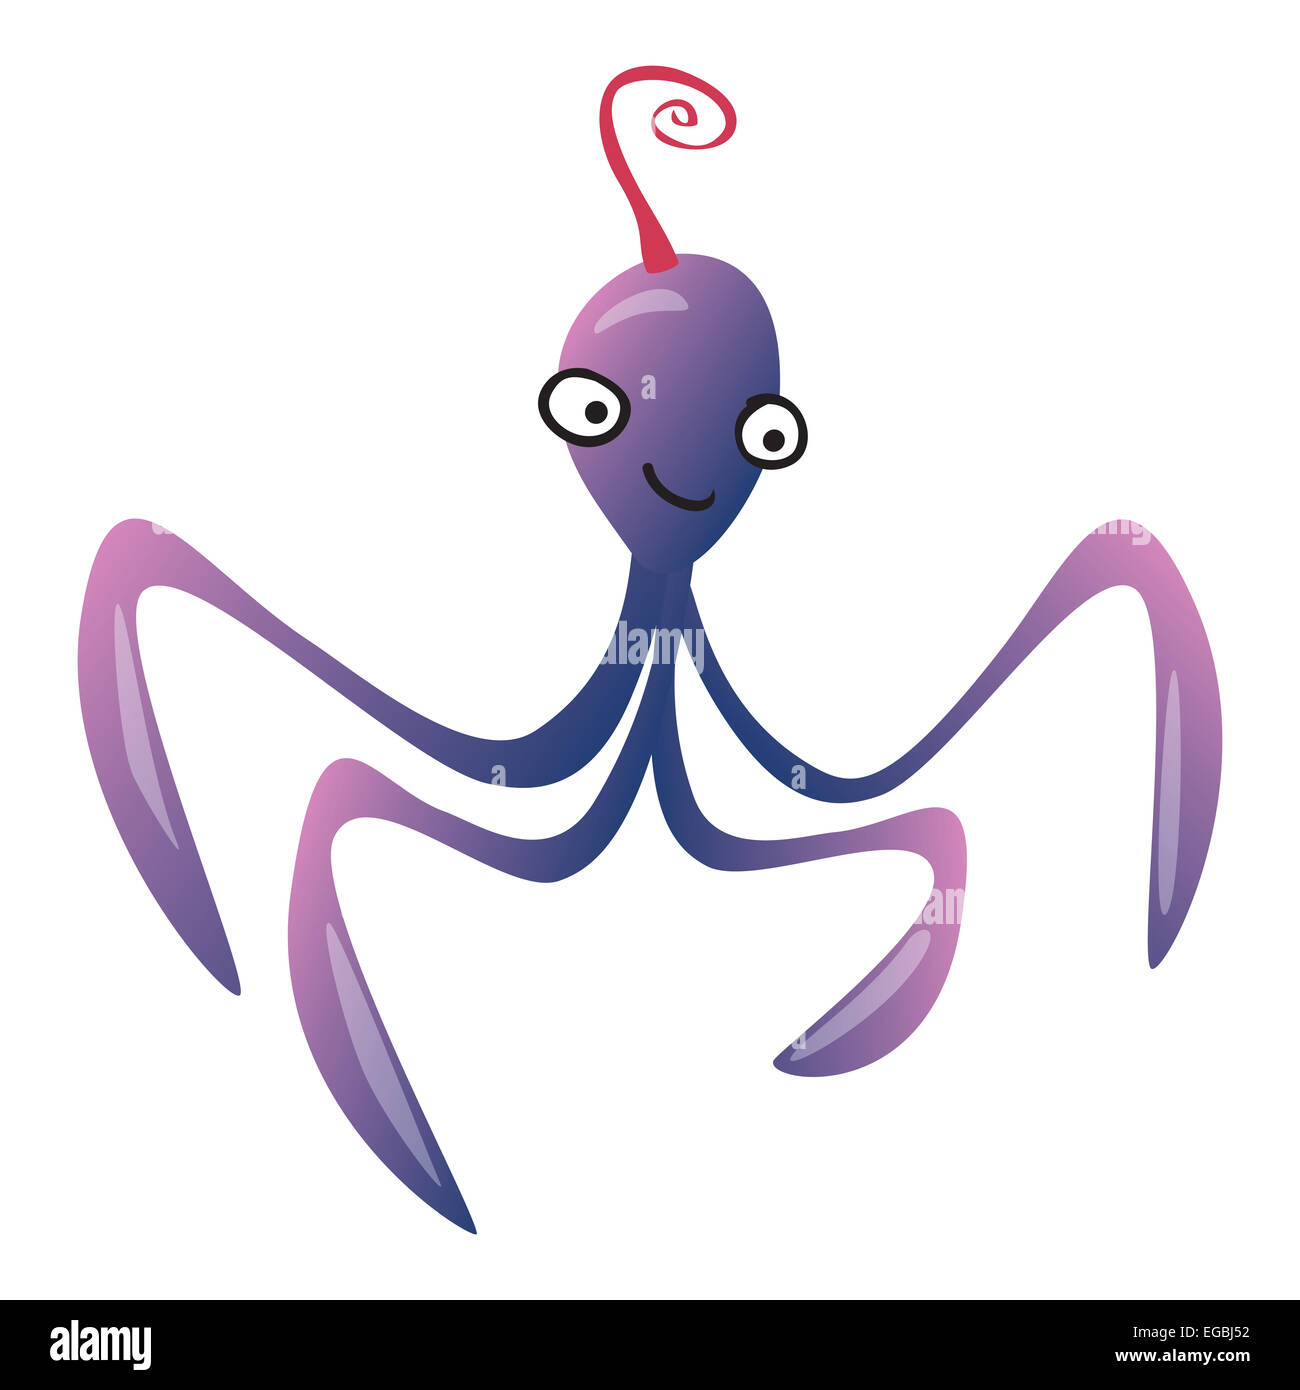 Funny cartoon octopus or an alien monster or Kraken Stock Photo